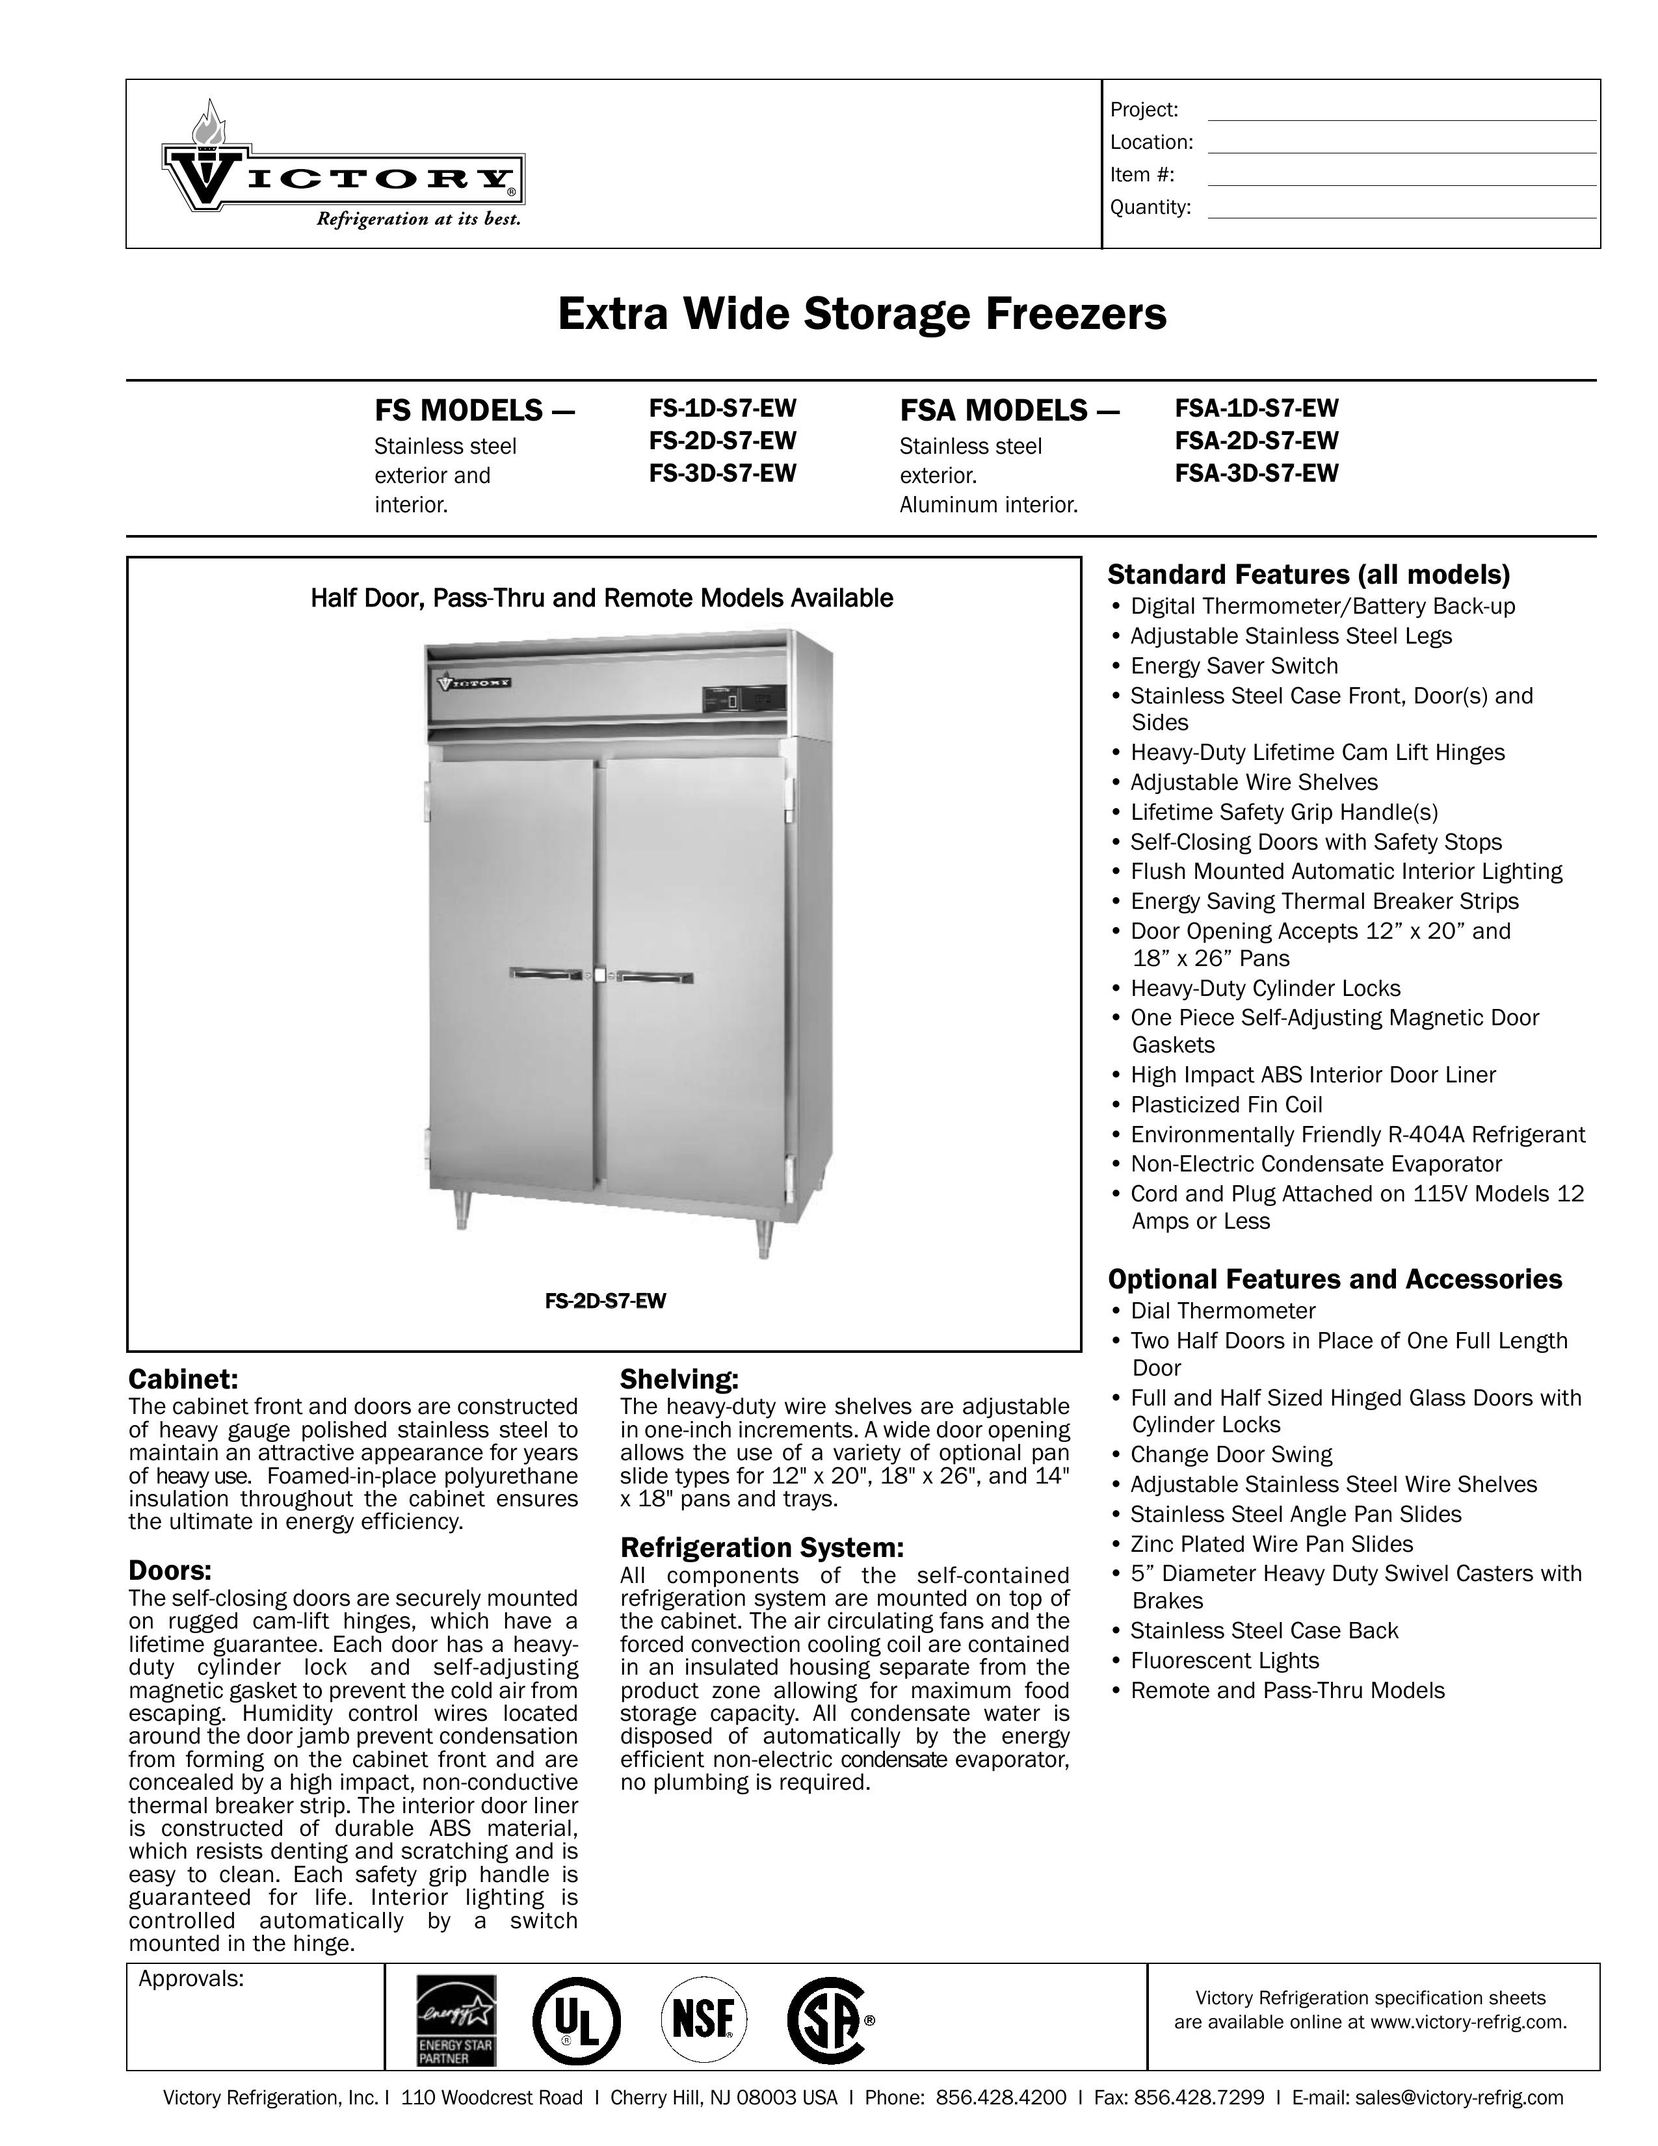 Victory Refrigeration FSA-1D-S7-EW Freezer User Manual